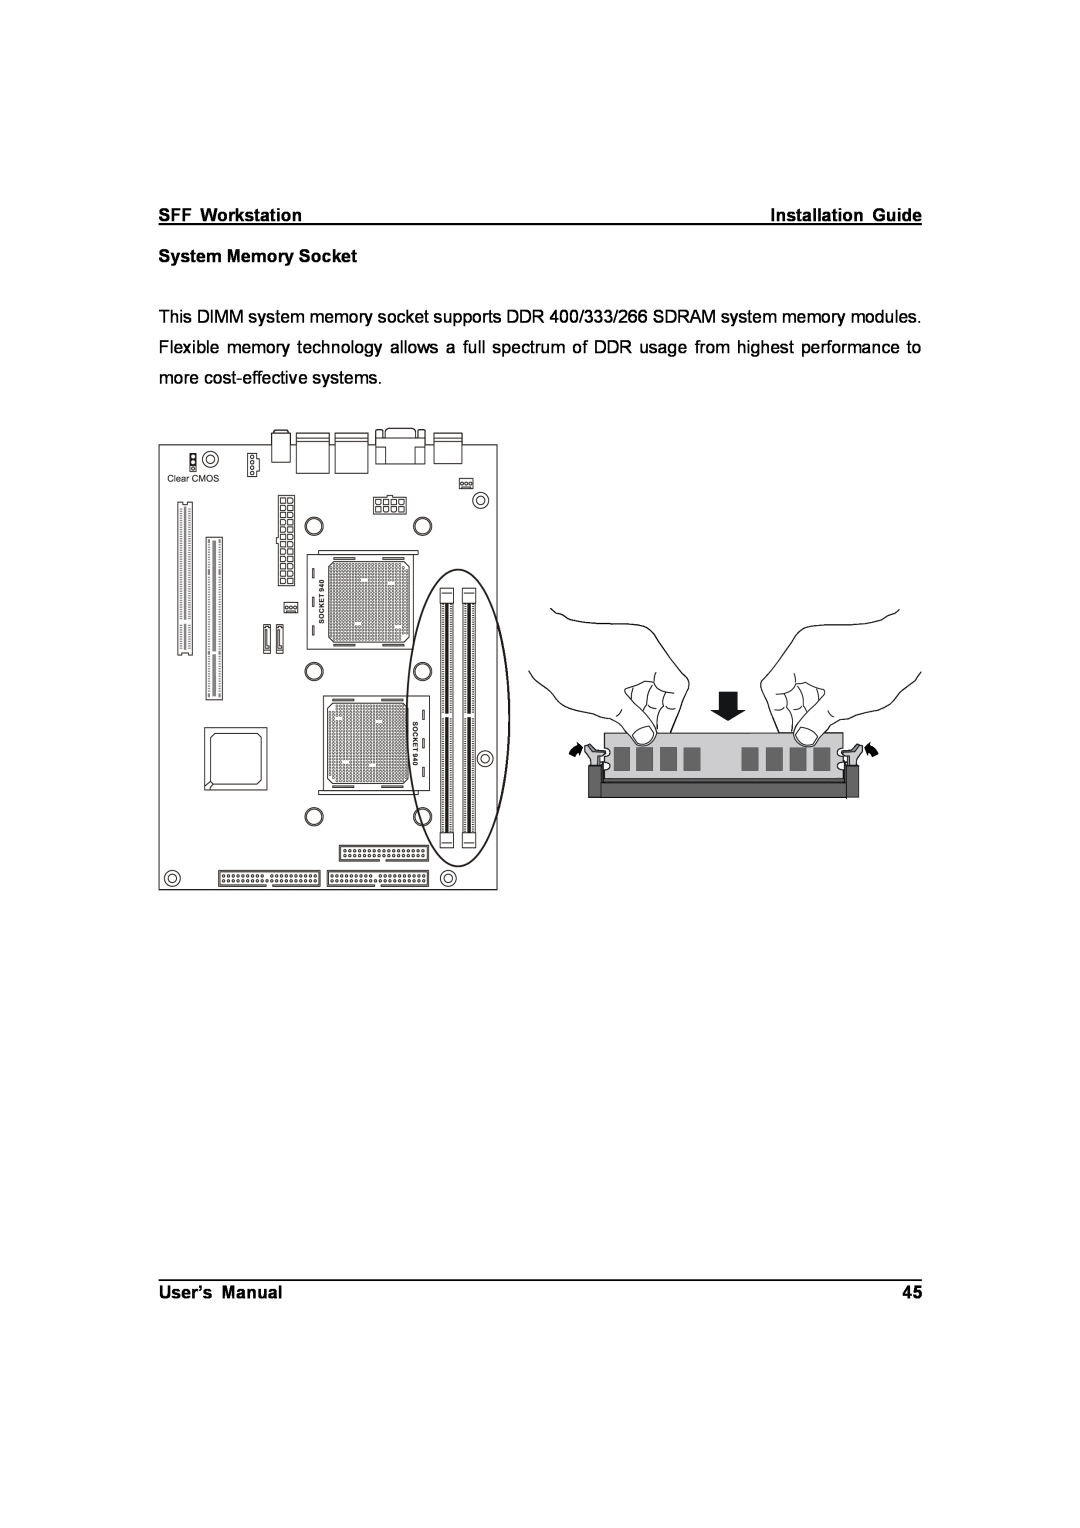 IBM ZMAXdp user manual SFF Workstation, System Memory Socket, User’s Manual, Installation Guide 